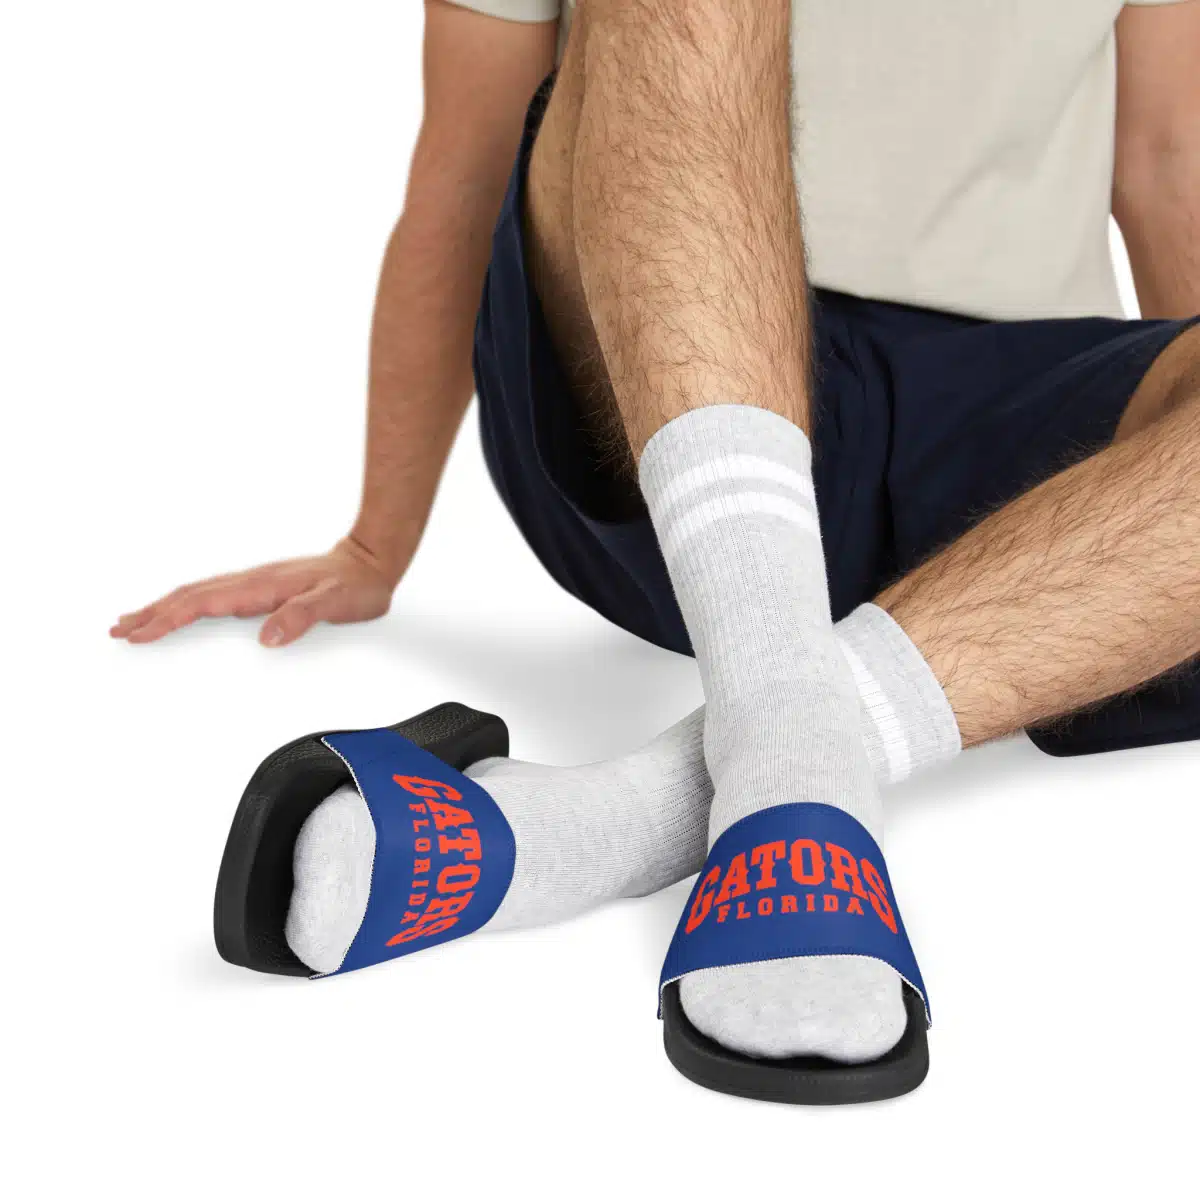 Featured image for “Men's PU Slide Sandals”